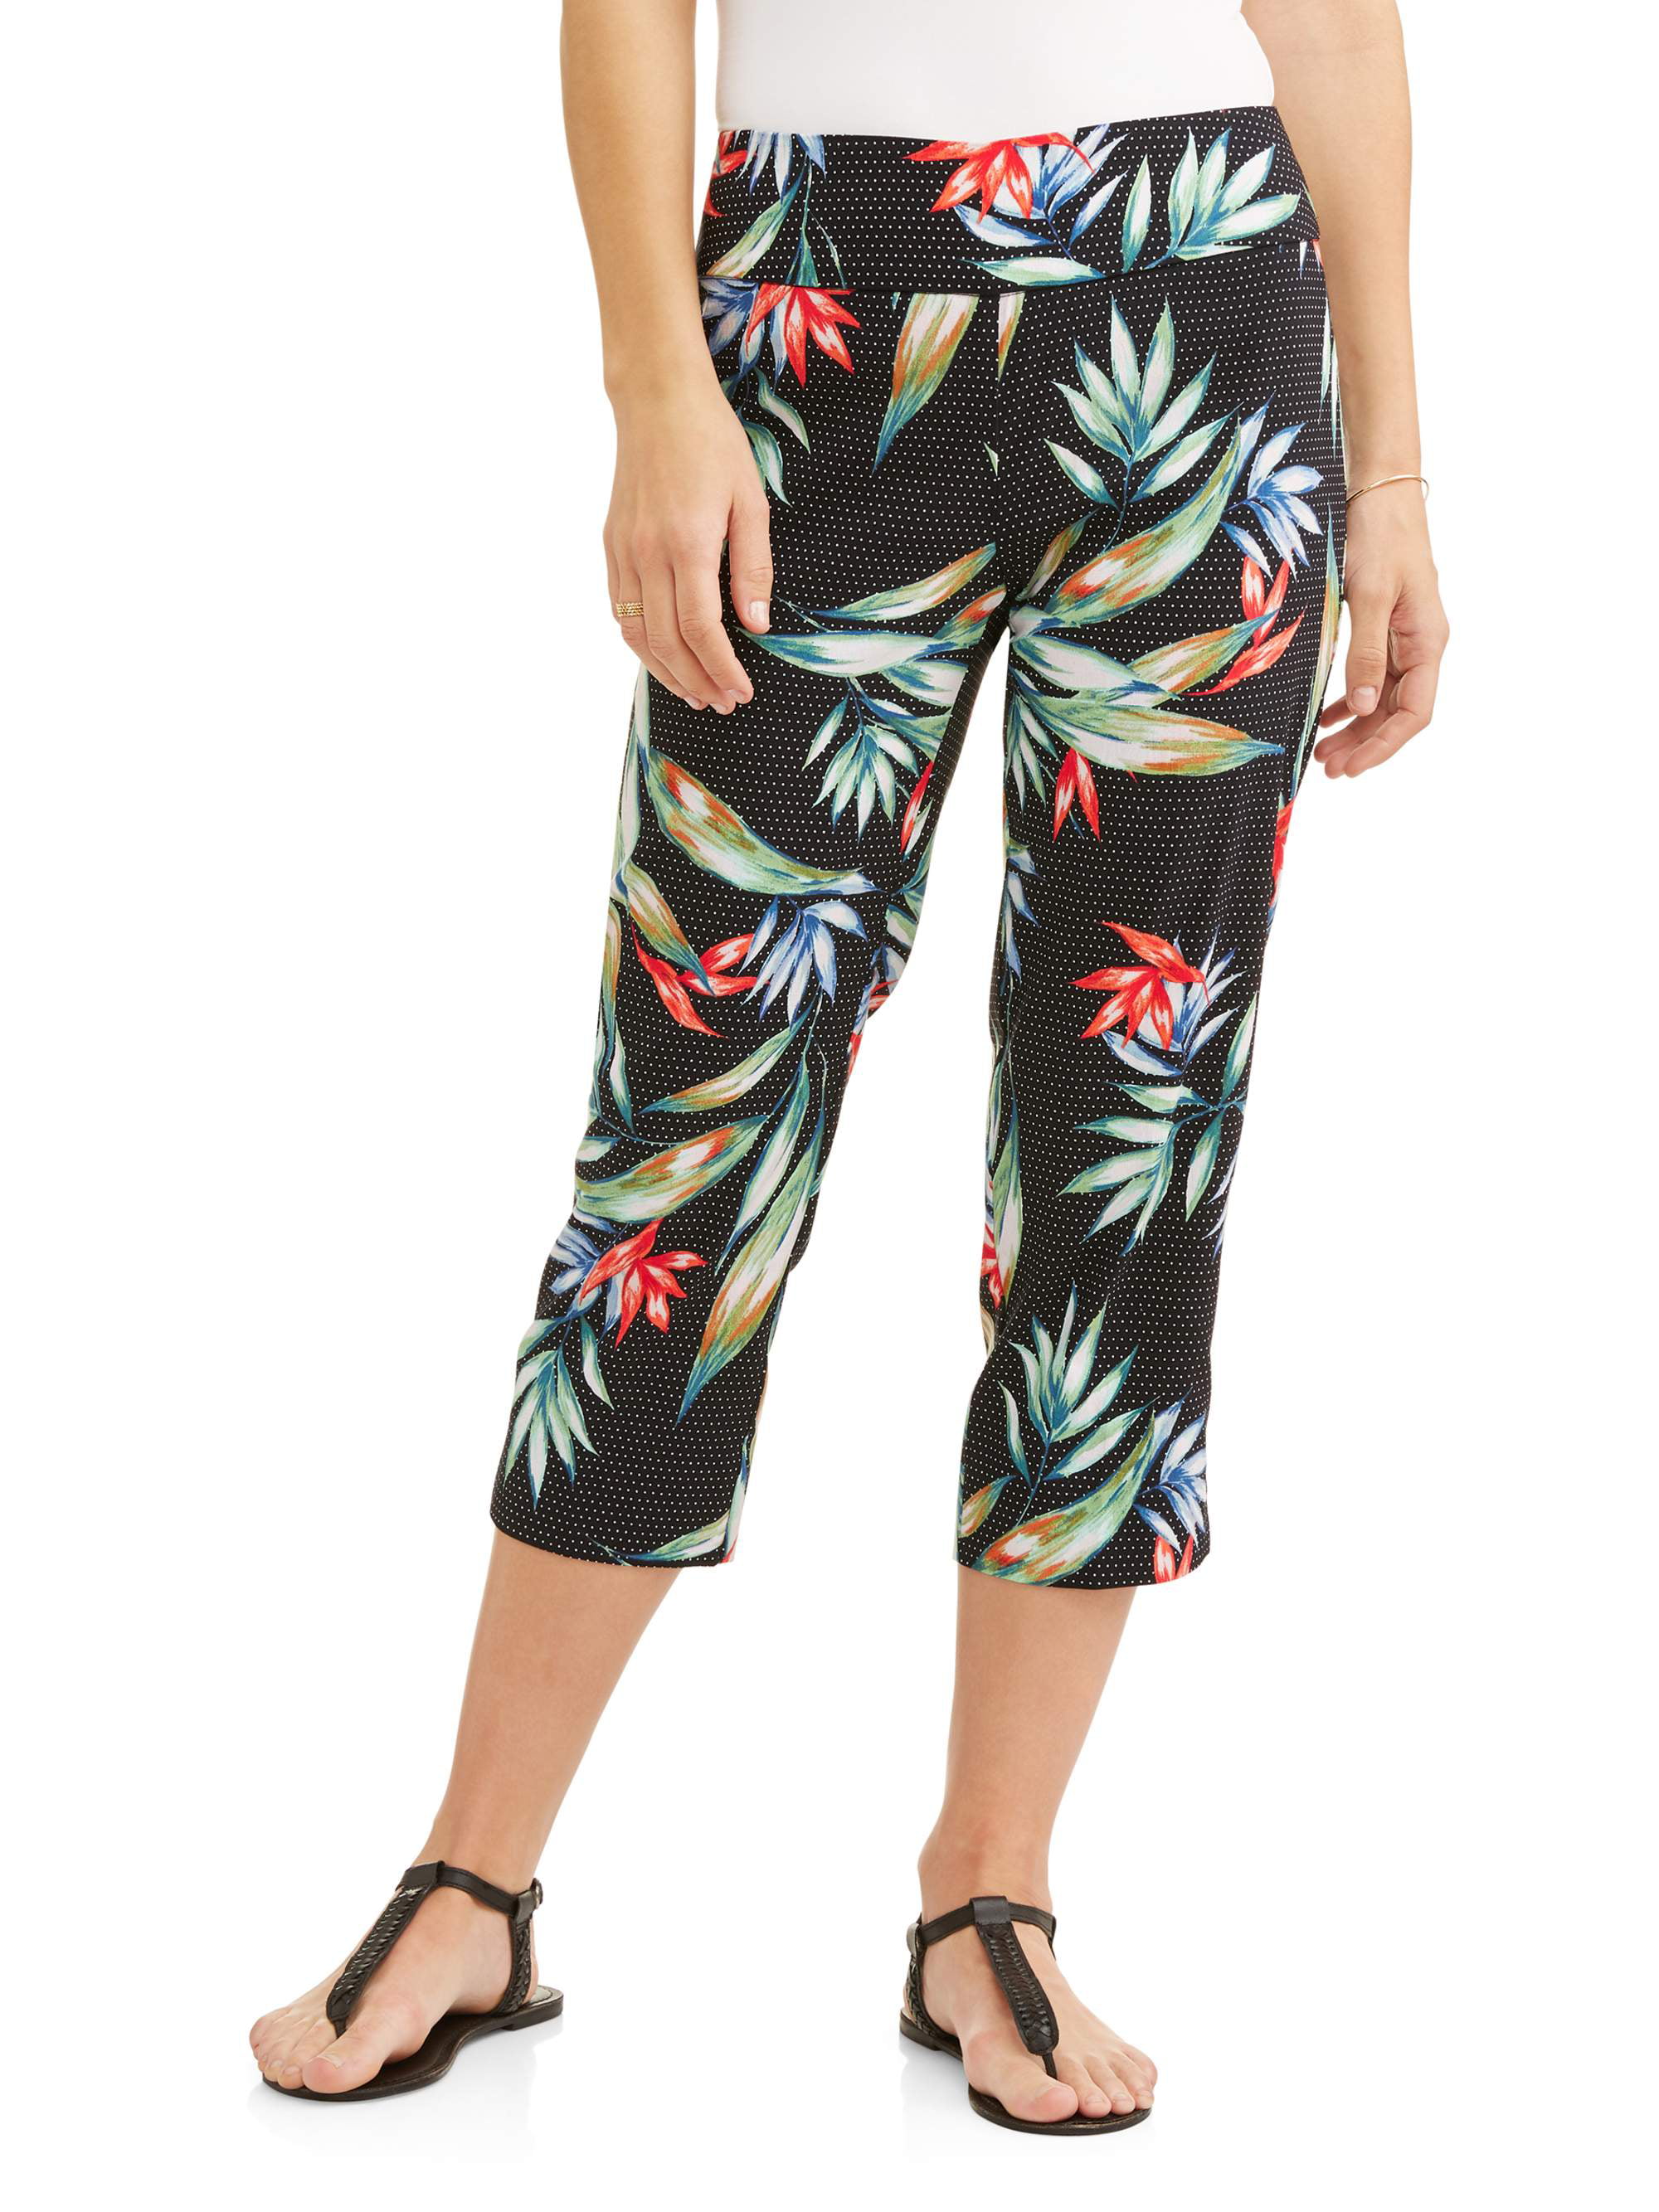 Lifestyle Attitude Women's Woven Printed Millenium Crop Pants - Walmart.com